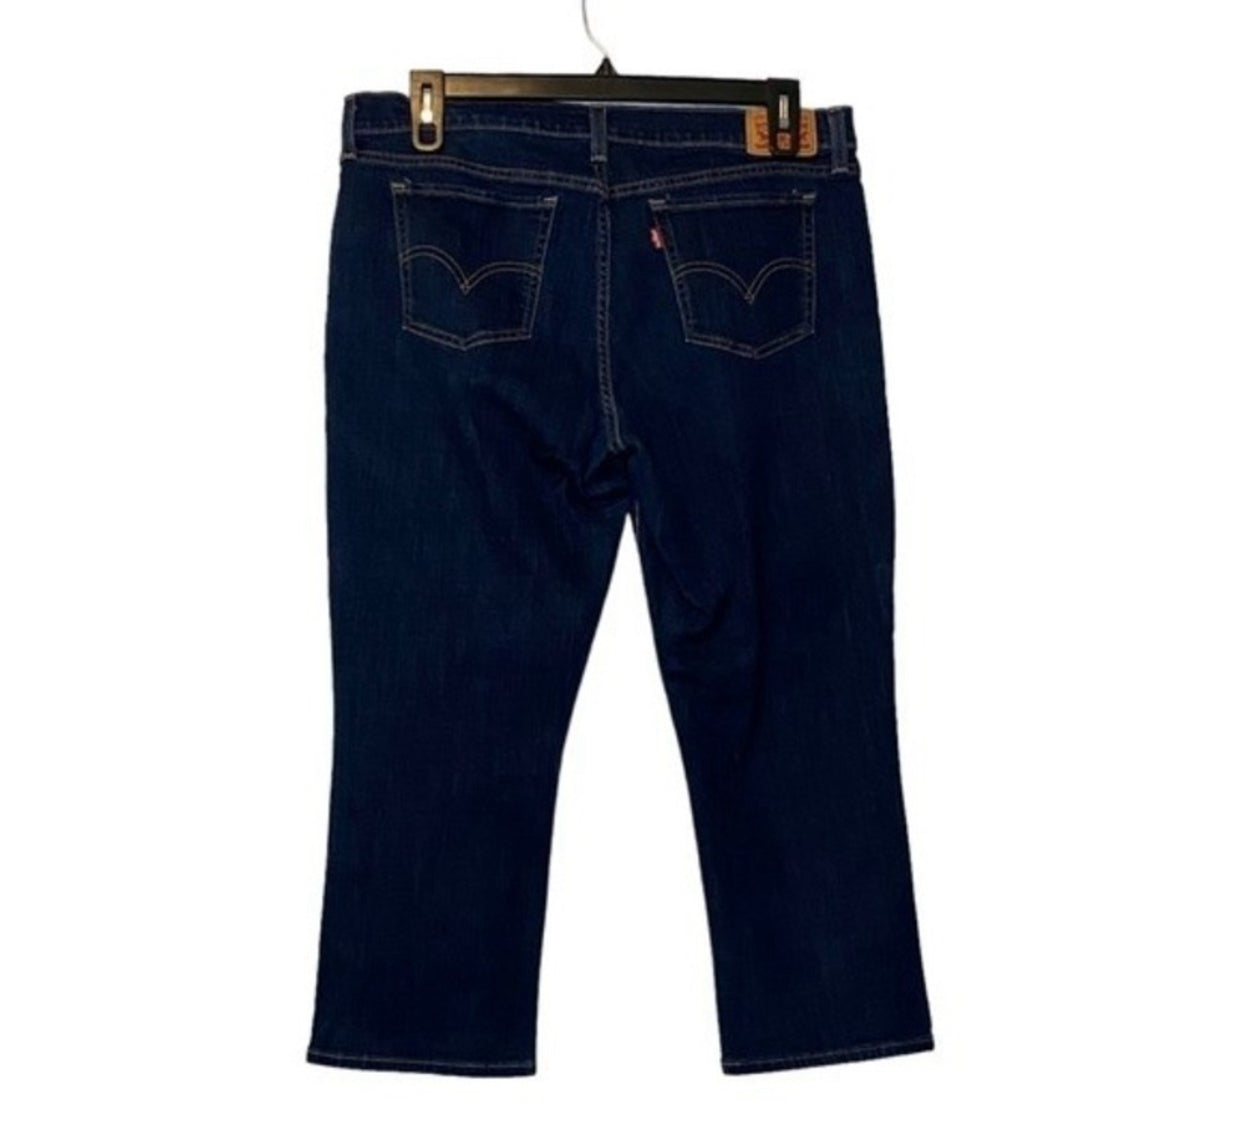 Levi’s Low Rise Cropped Capri Jeans - Size 32